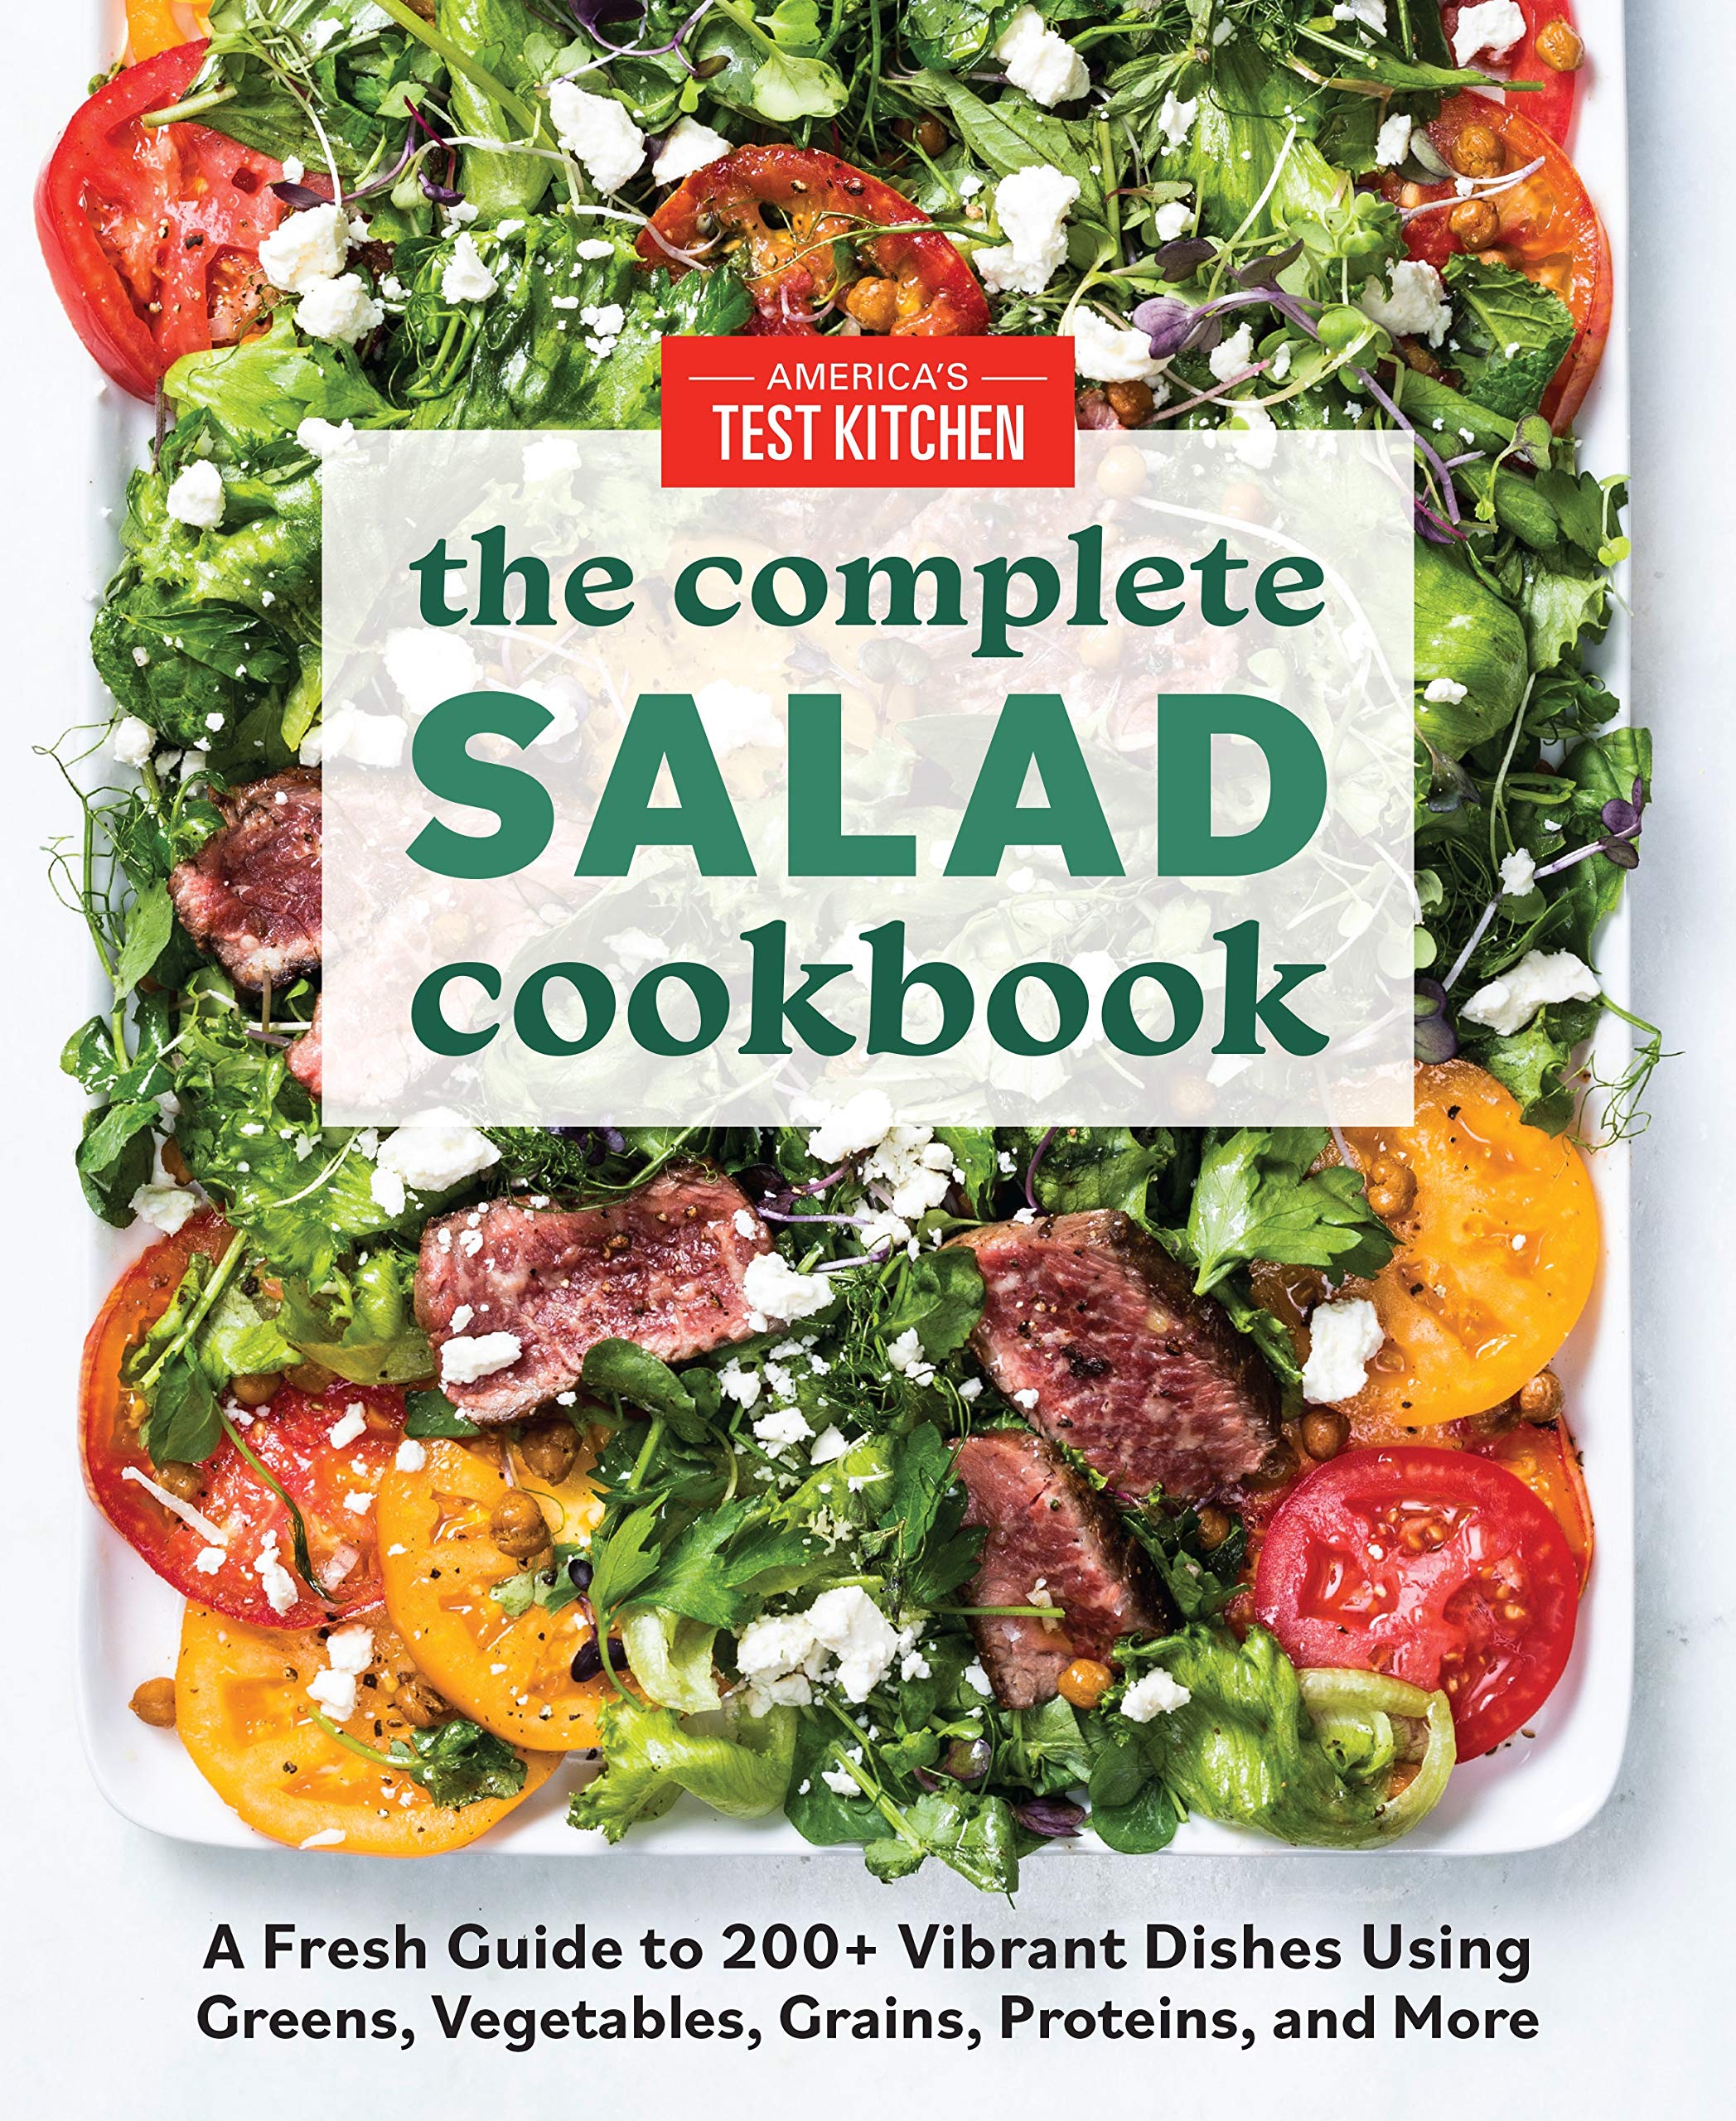 The Complete Salad Cookbook (America's Test Kitchen)